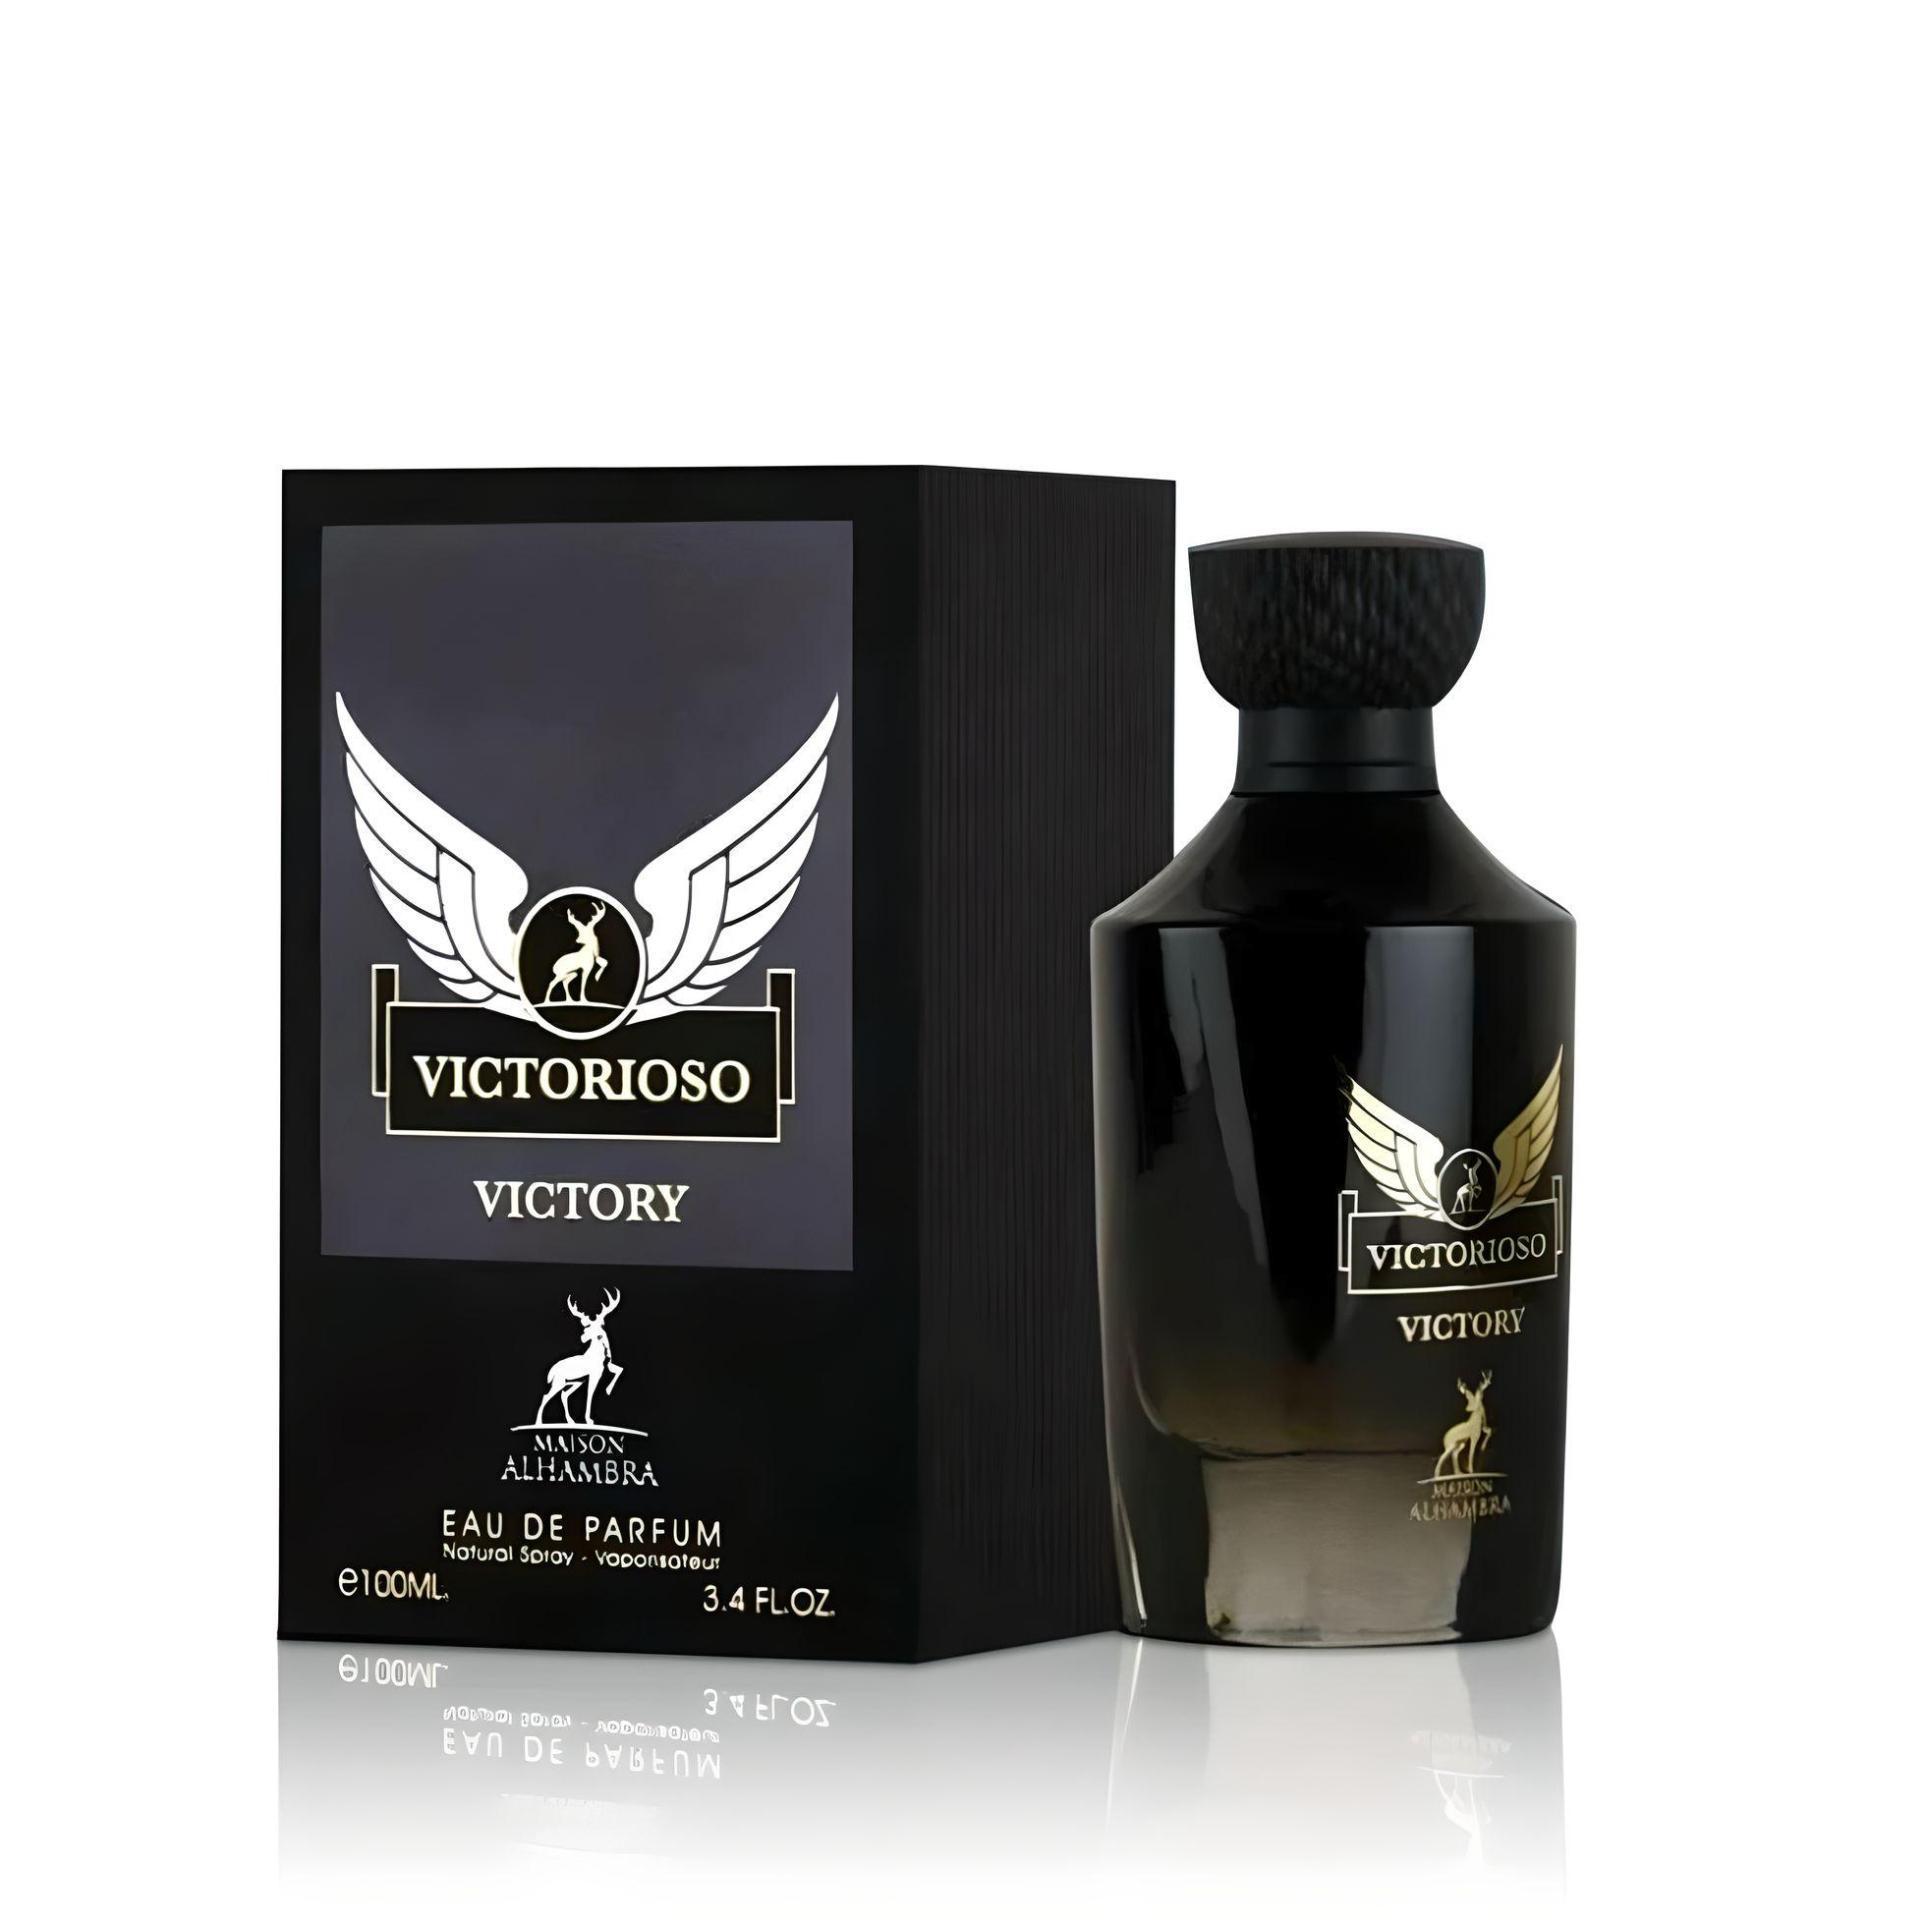 Victorioso Victory Perfume / Eau De Parfum By Maison Alhambra / Lattafa (Inspired By Invictus Victory)